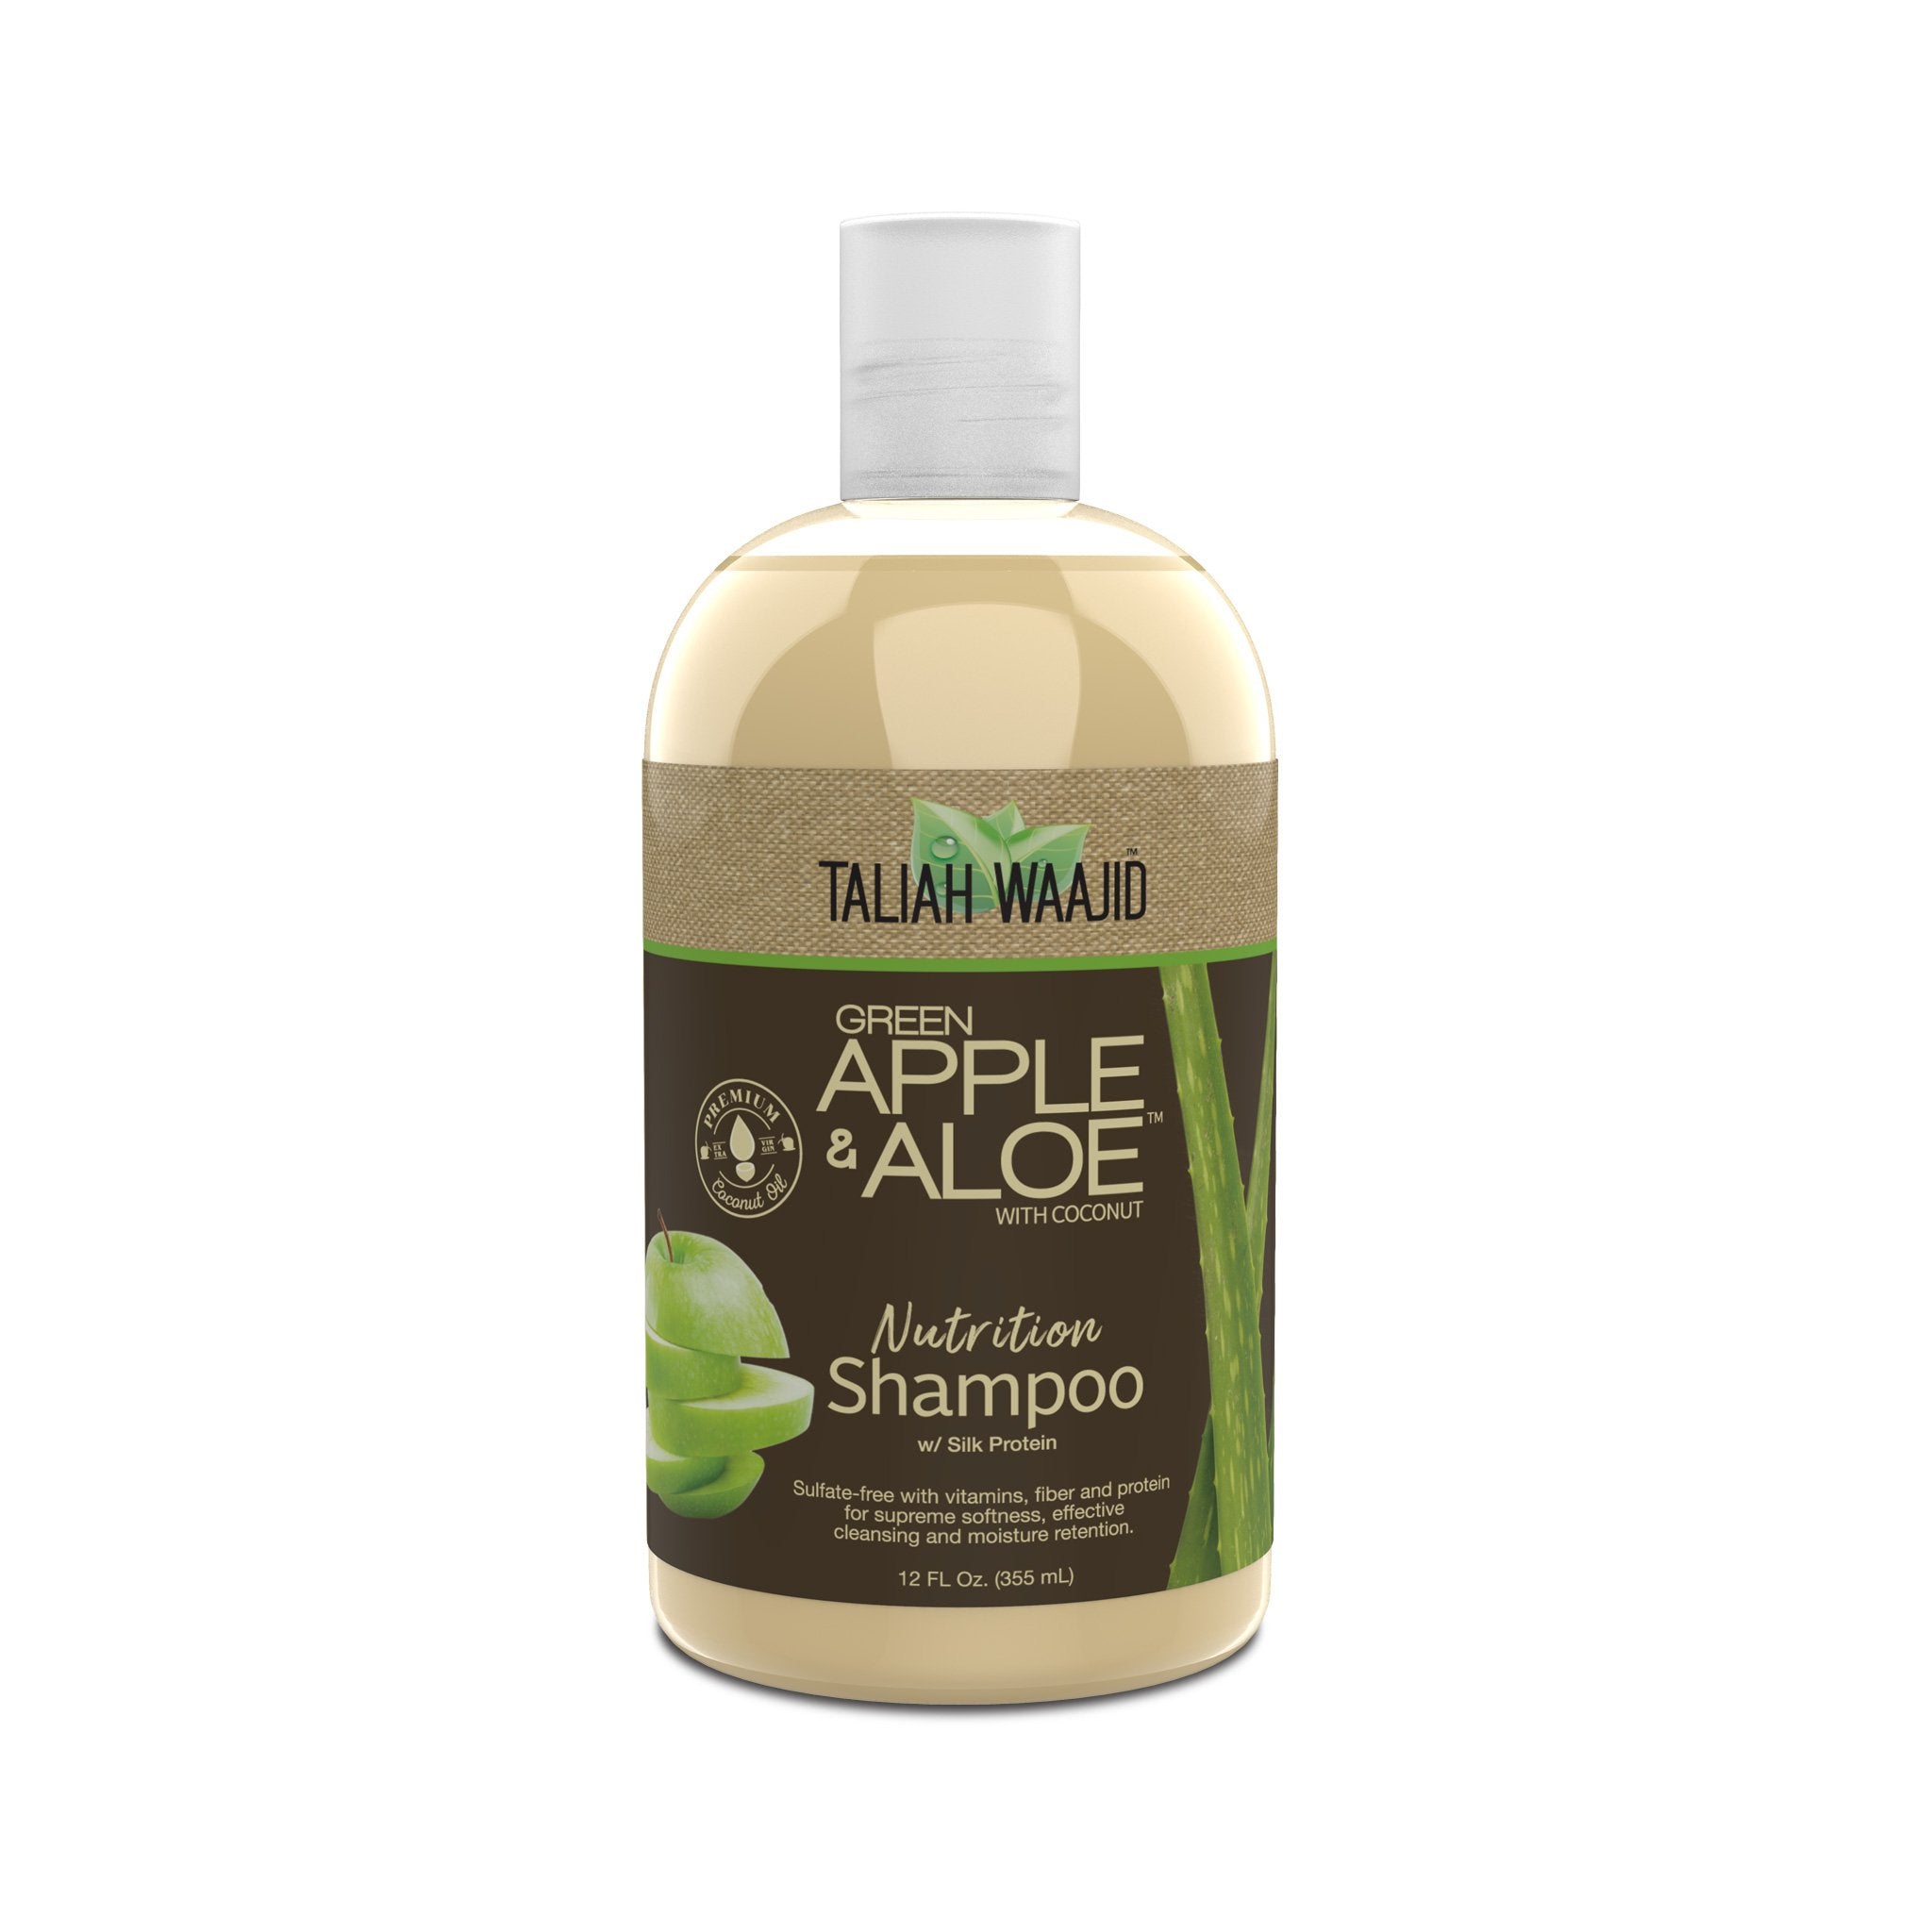 Taliah Waajid- Green Apple And Aloe Nutrition Shampoo